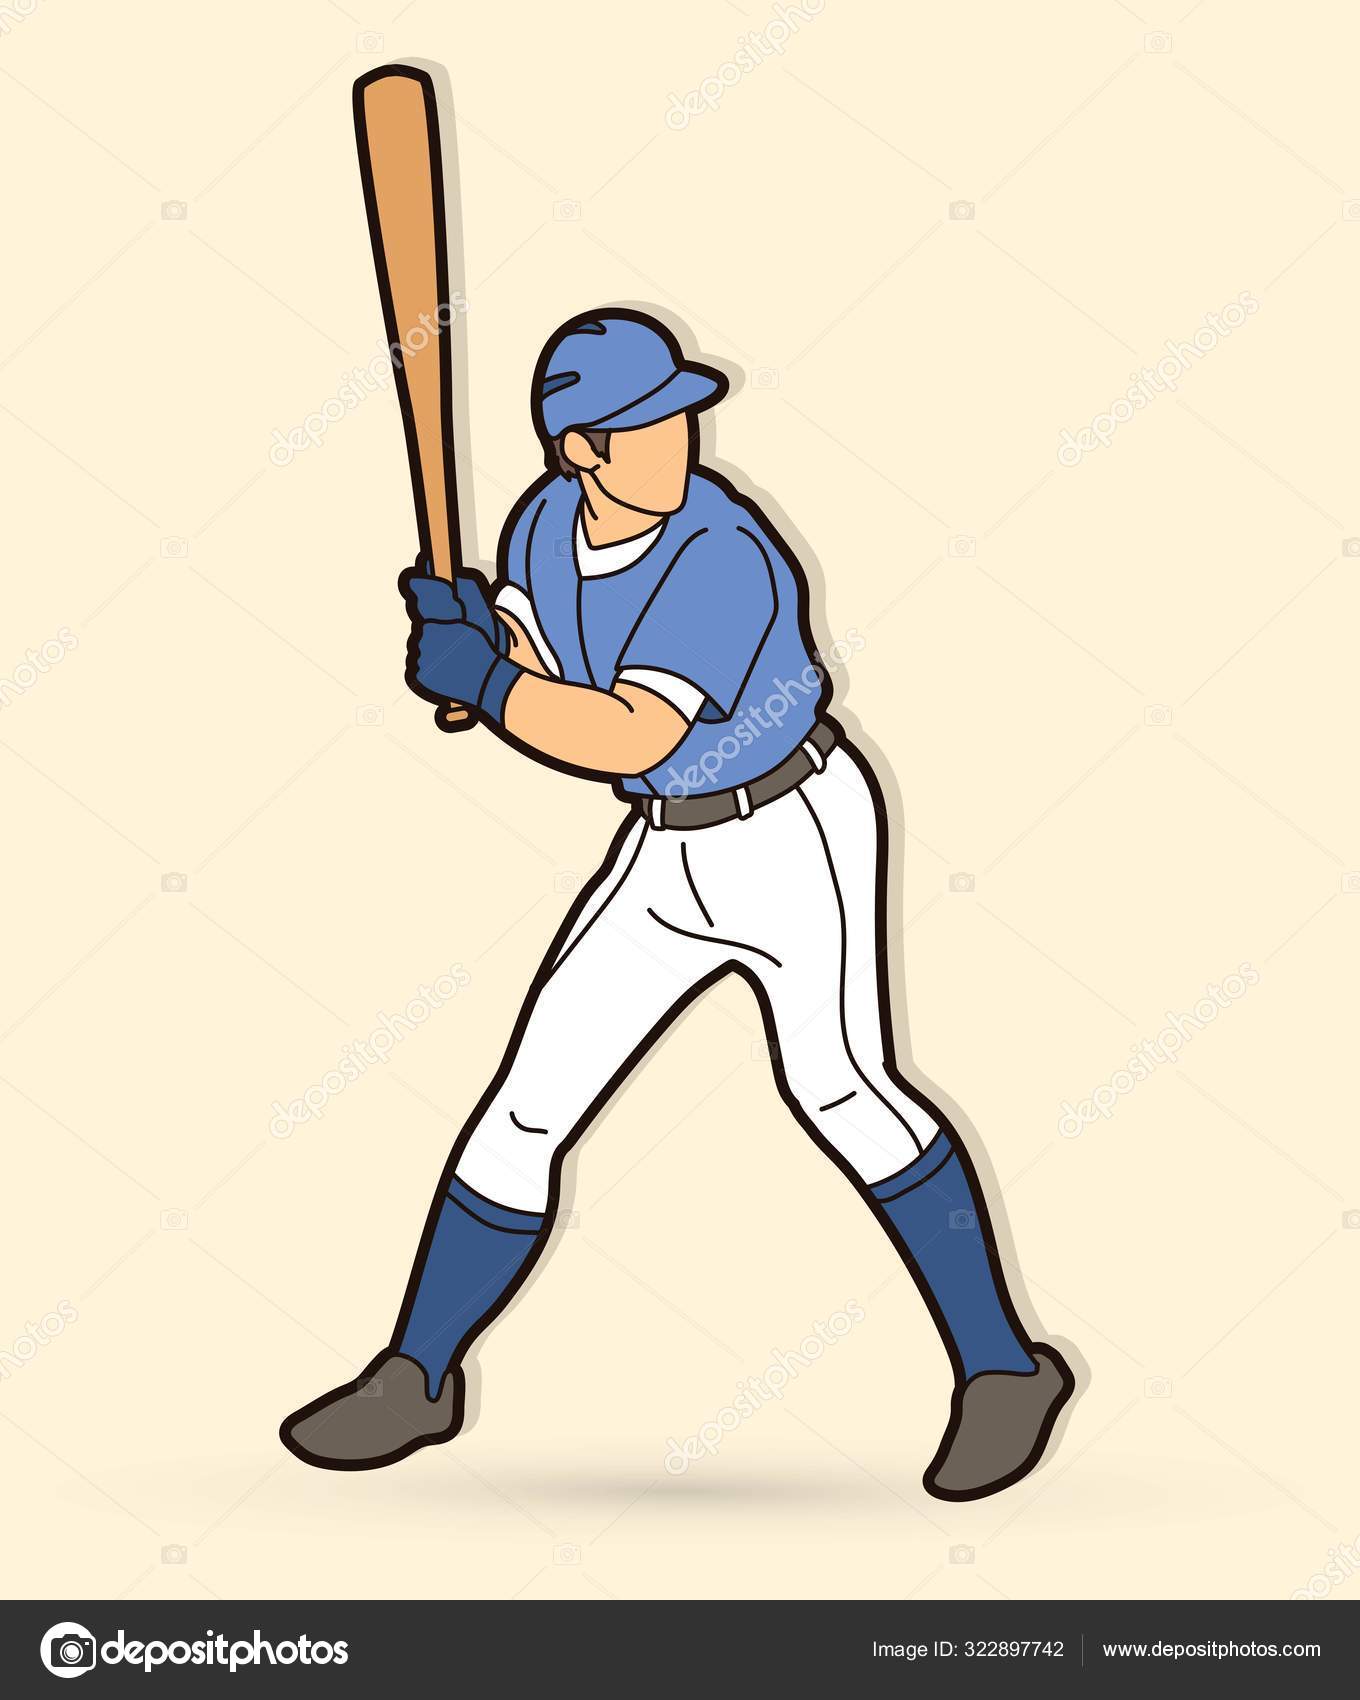 Baseball player action cartoon sport graphic - Stock